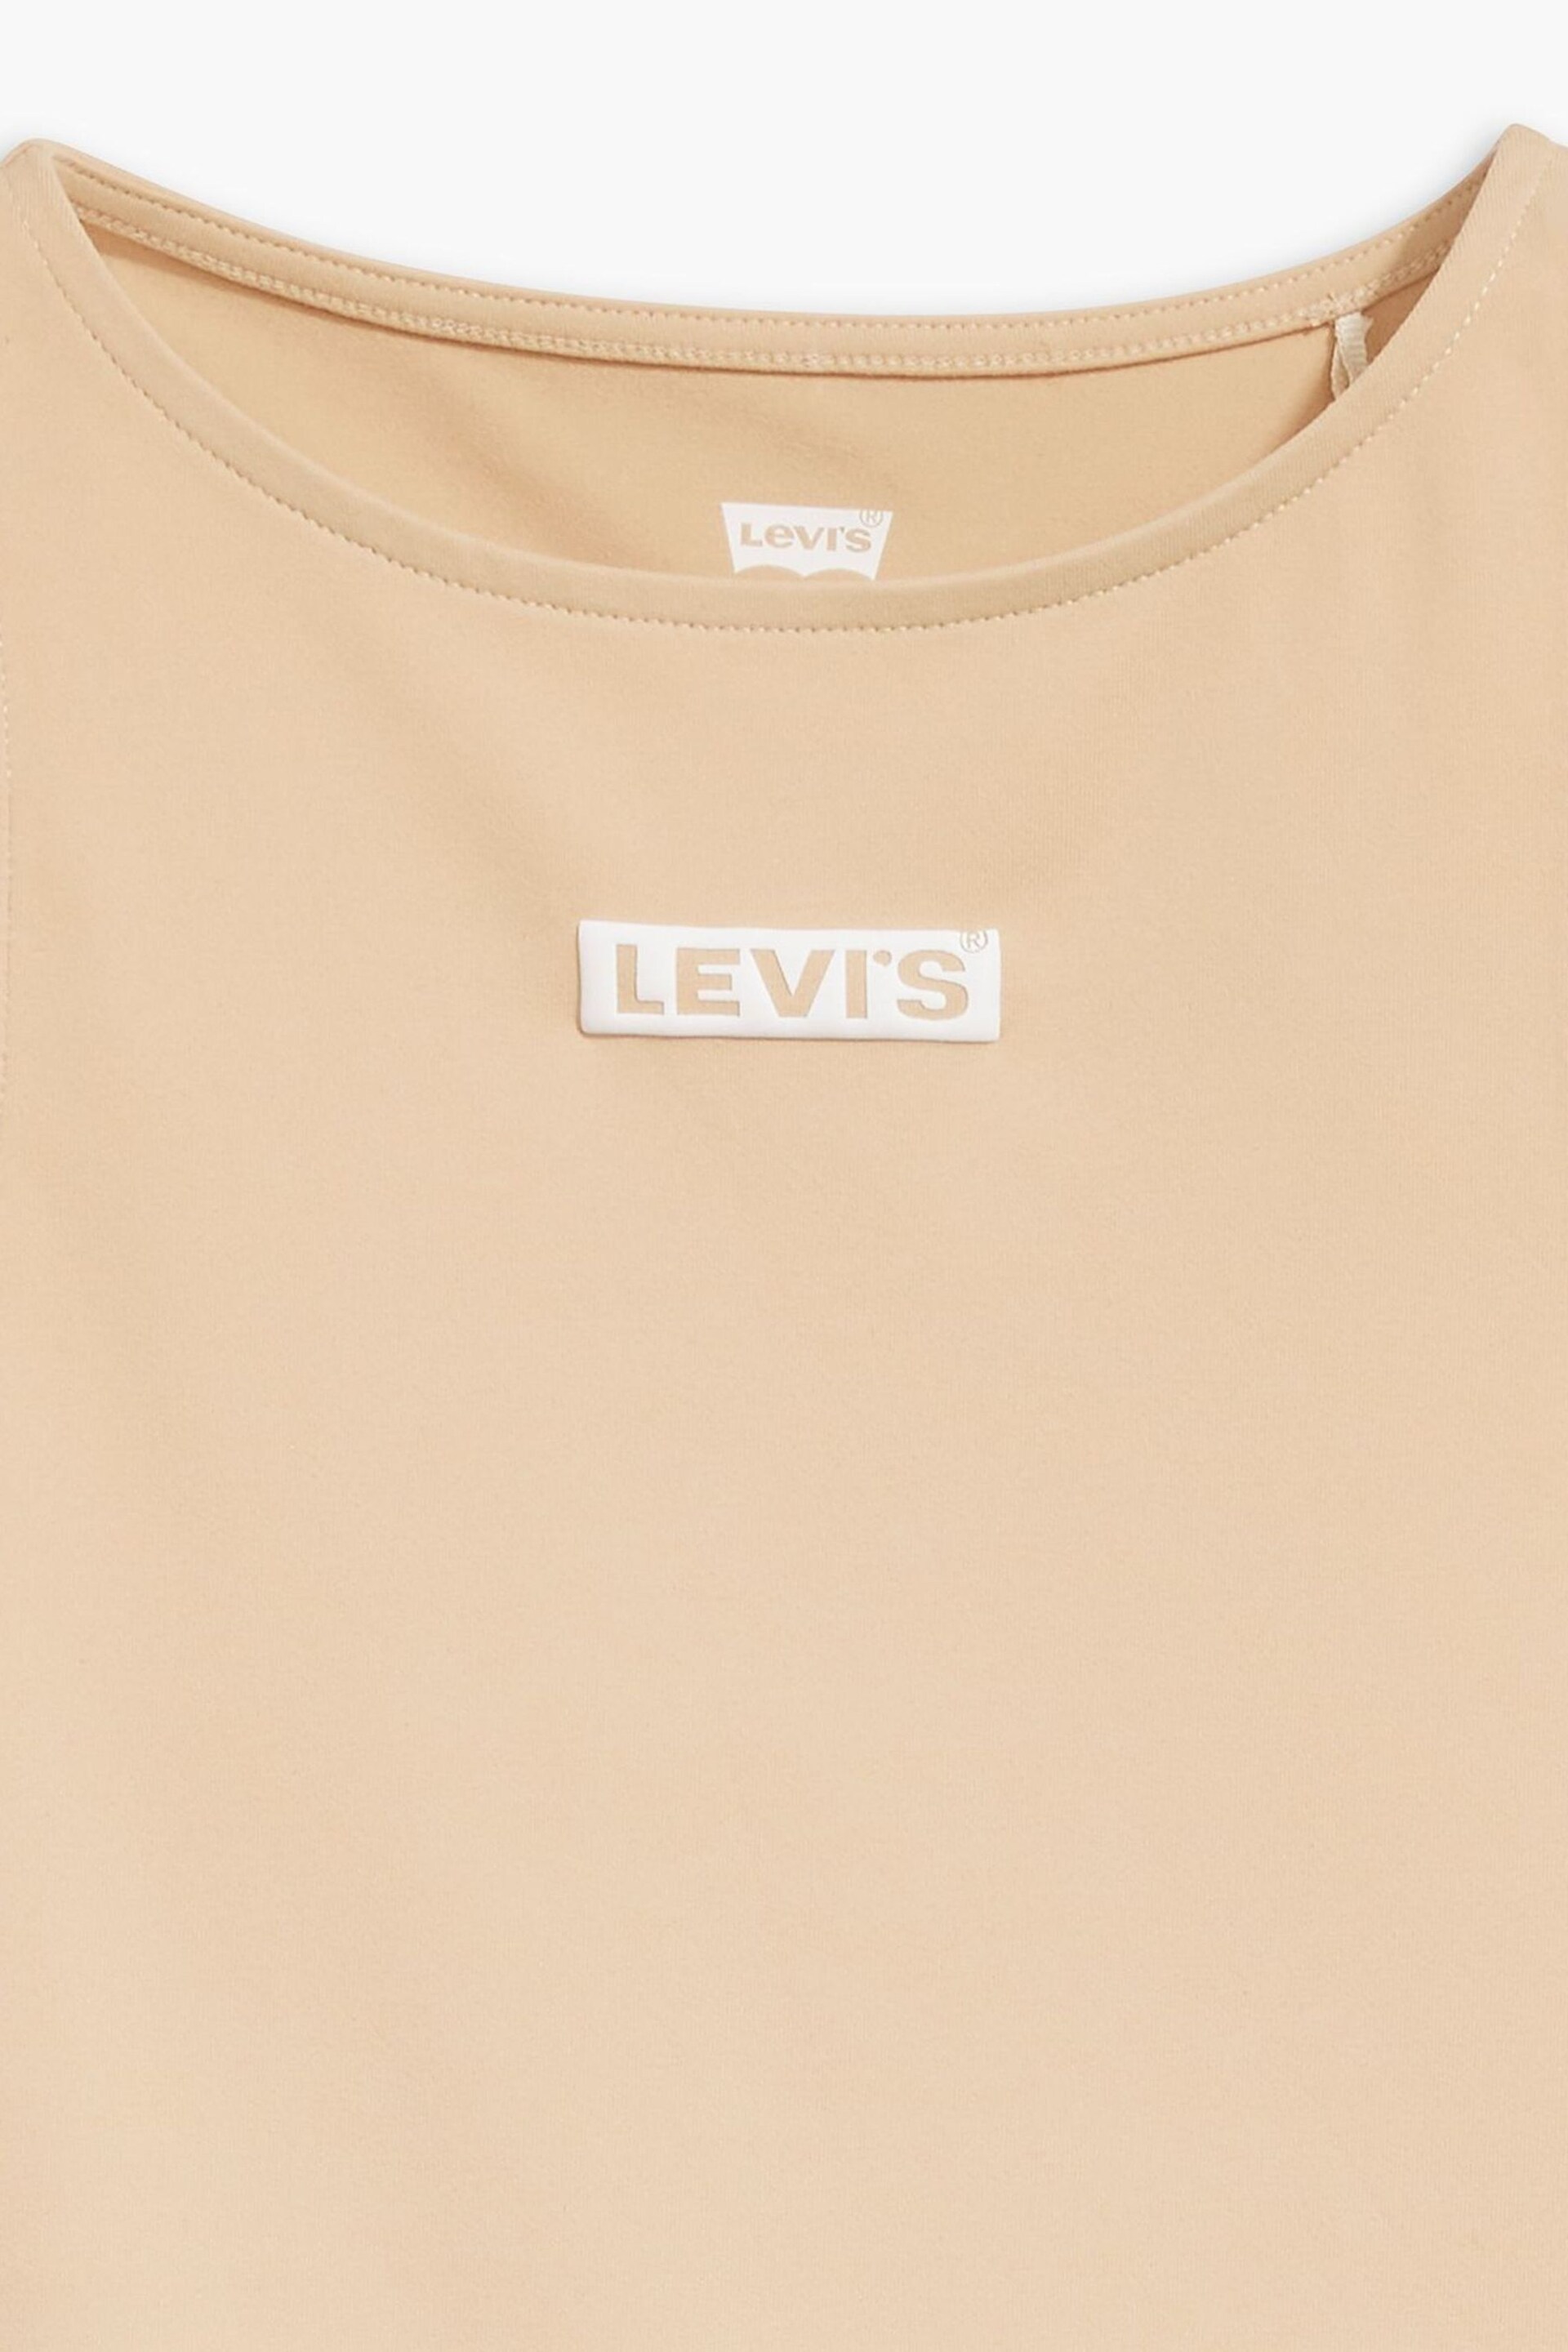 Levi's® Tan Brown High Neck Logo Vest - Image 4 of 5